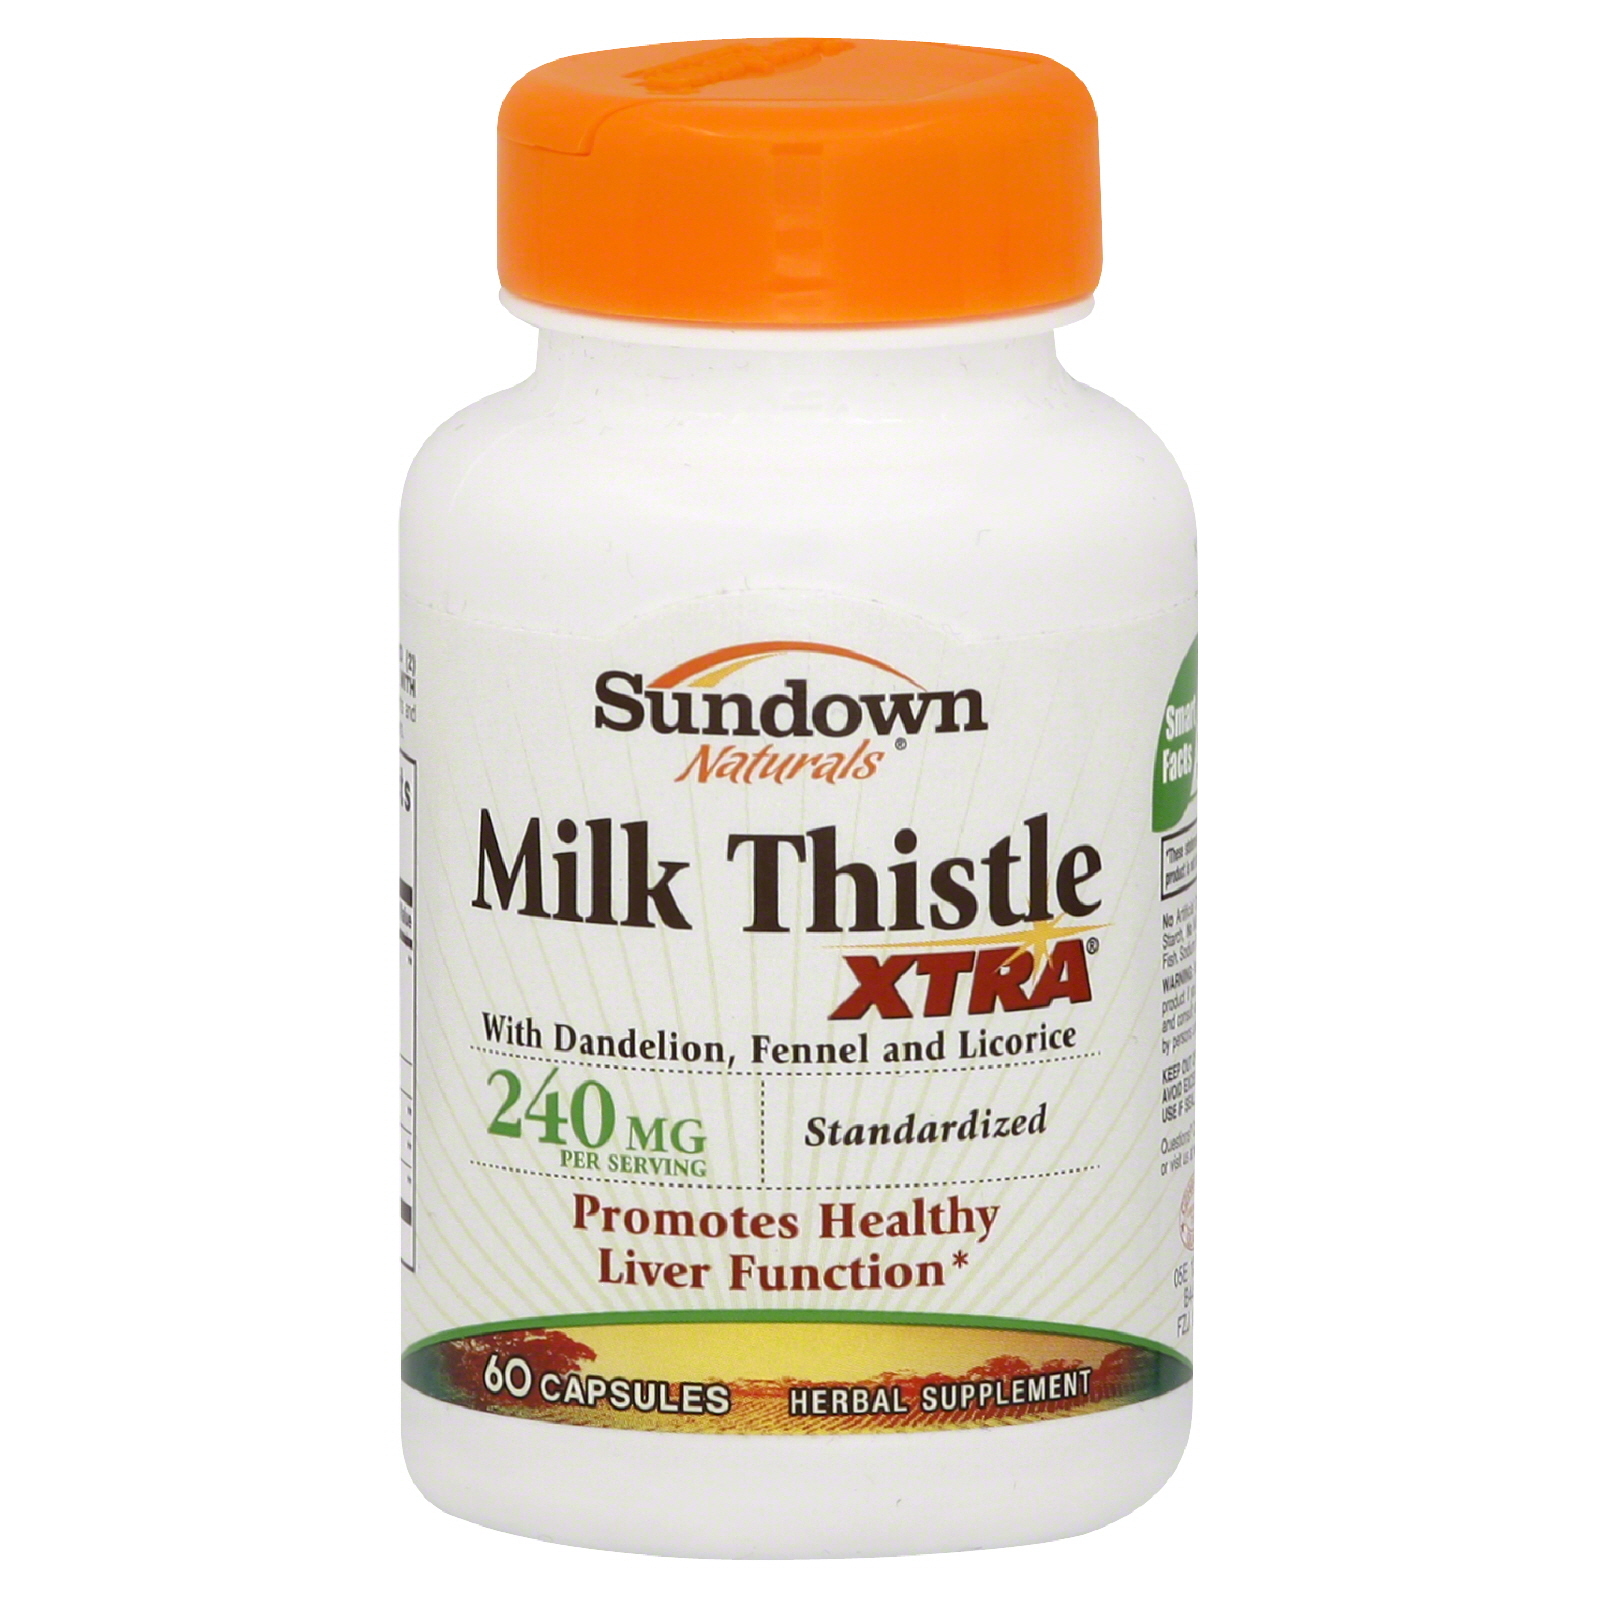 Sundown Naturals Milk Thistle, Xtra, 240 mg, Capsules, 60 capsules